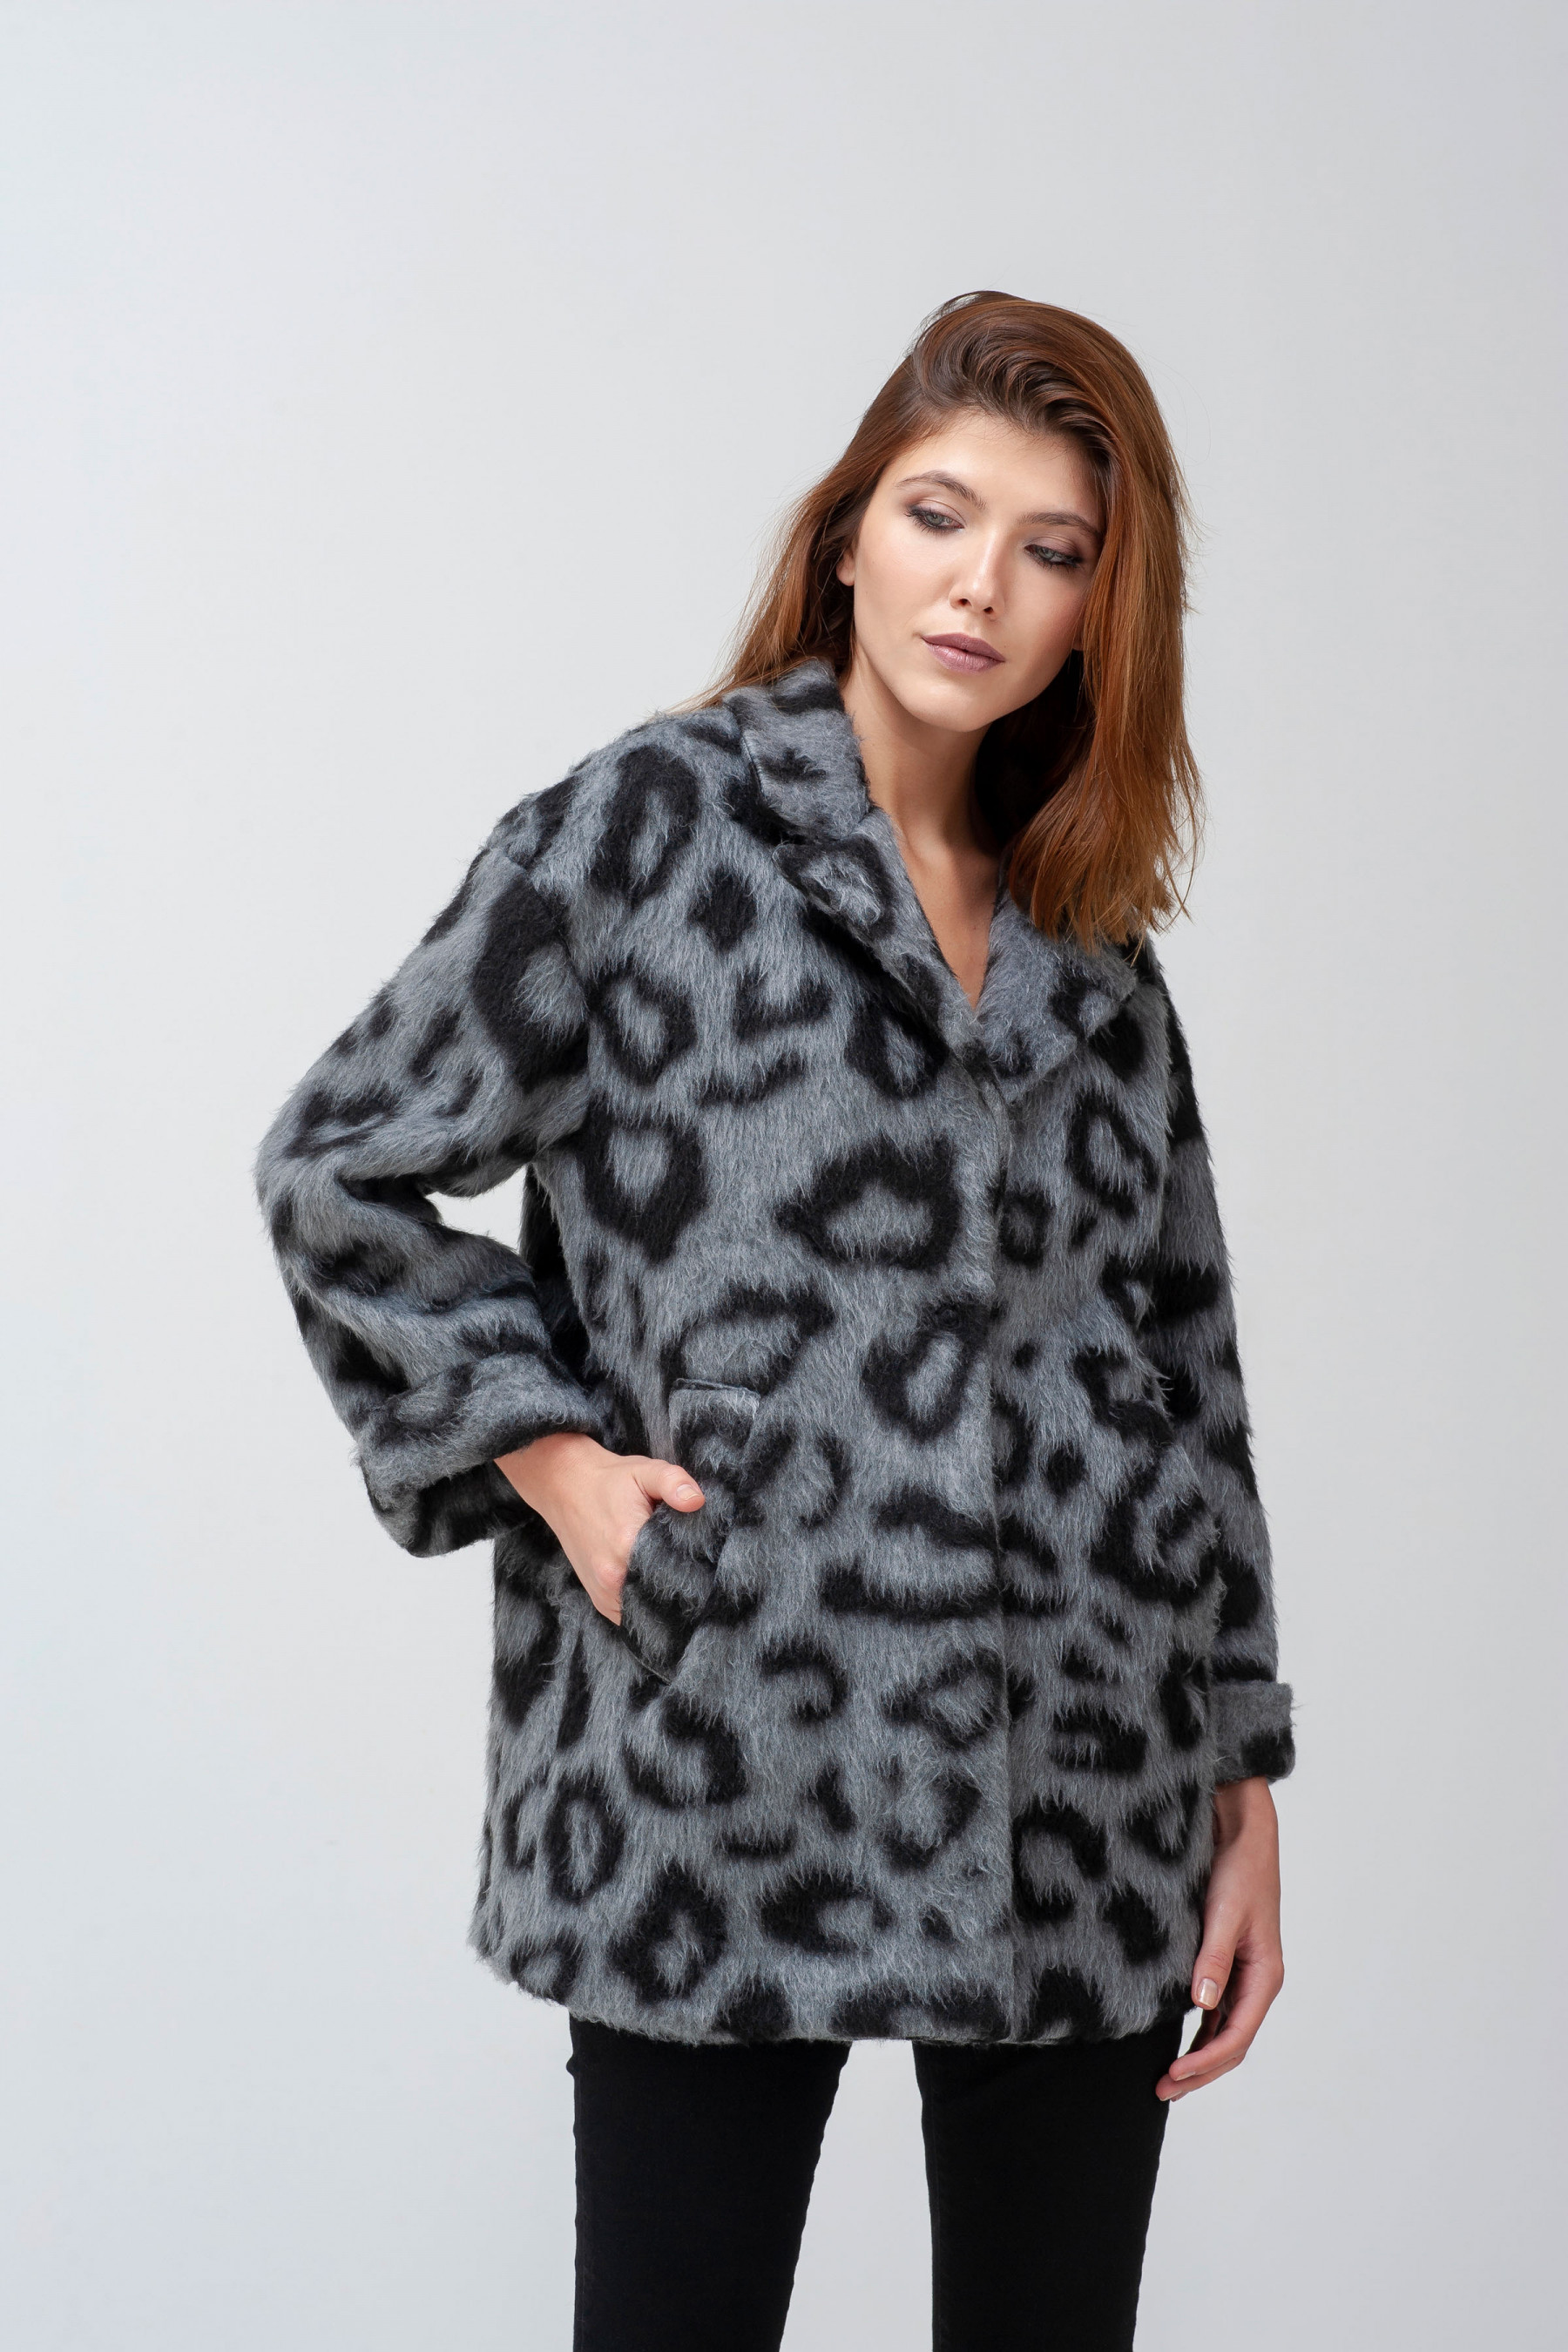 Warm Up Your Winter: Συνδύασε attrattivo πουλόβερ με πανωφόρι παραμένοντας ζεστή και κομψή